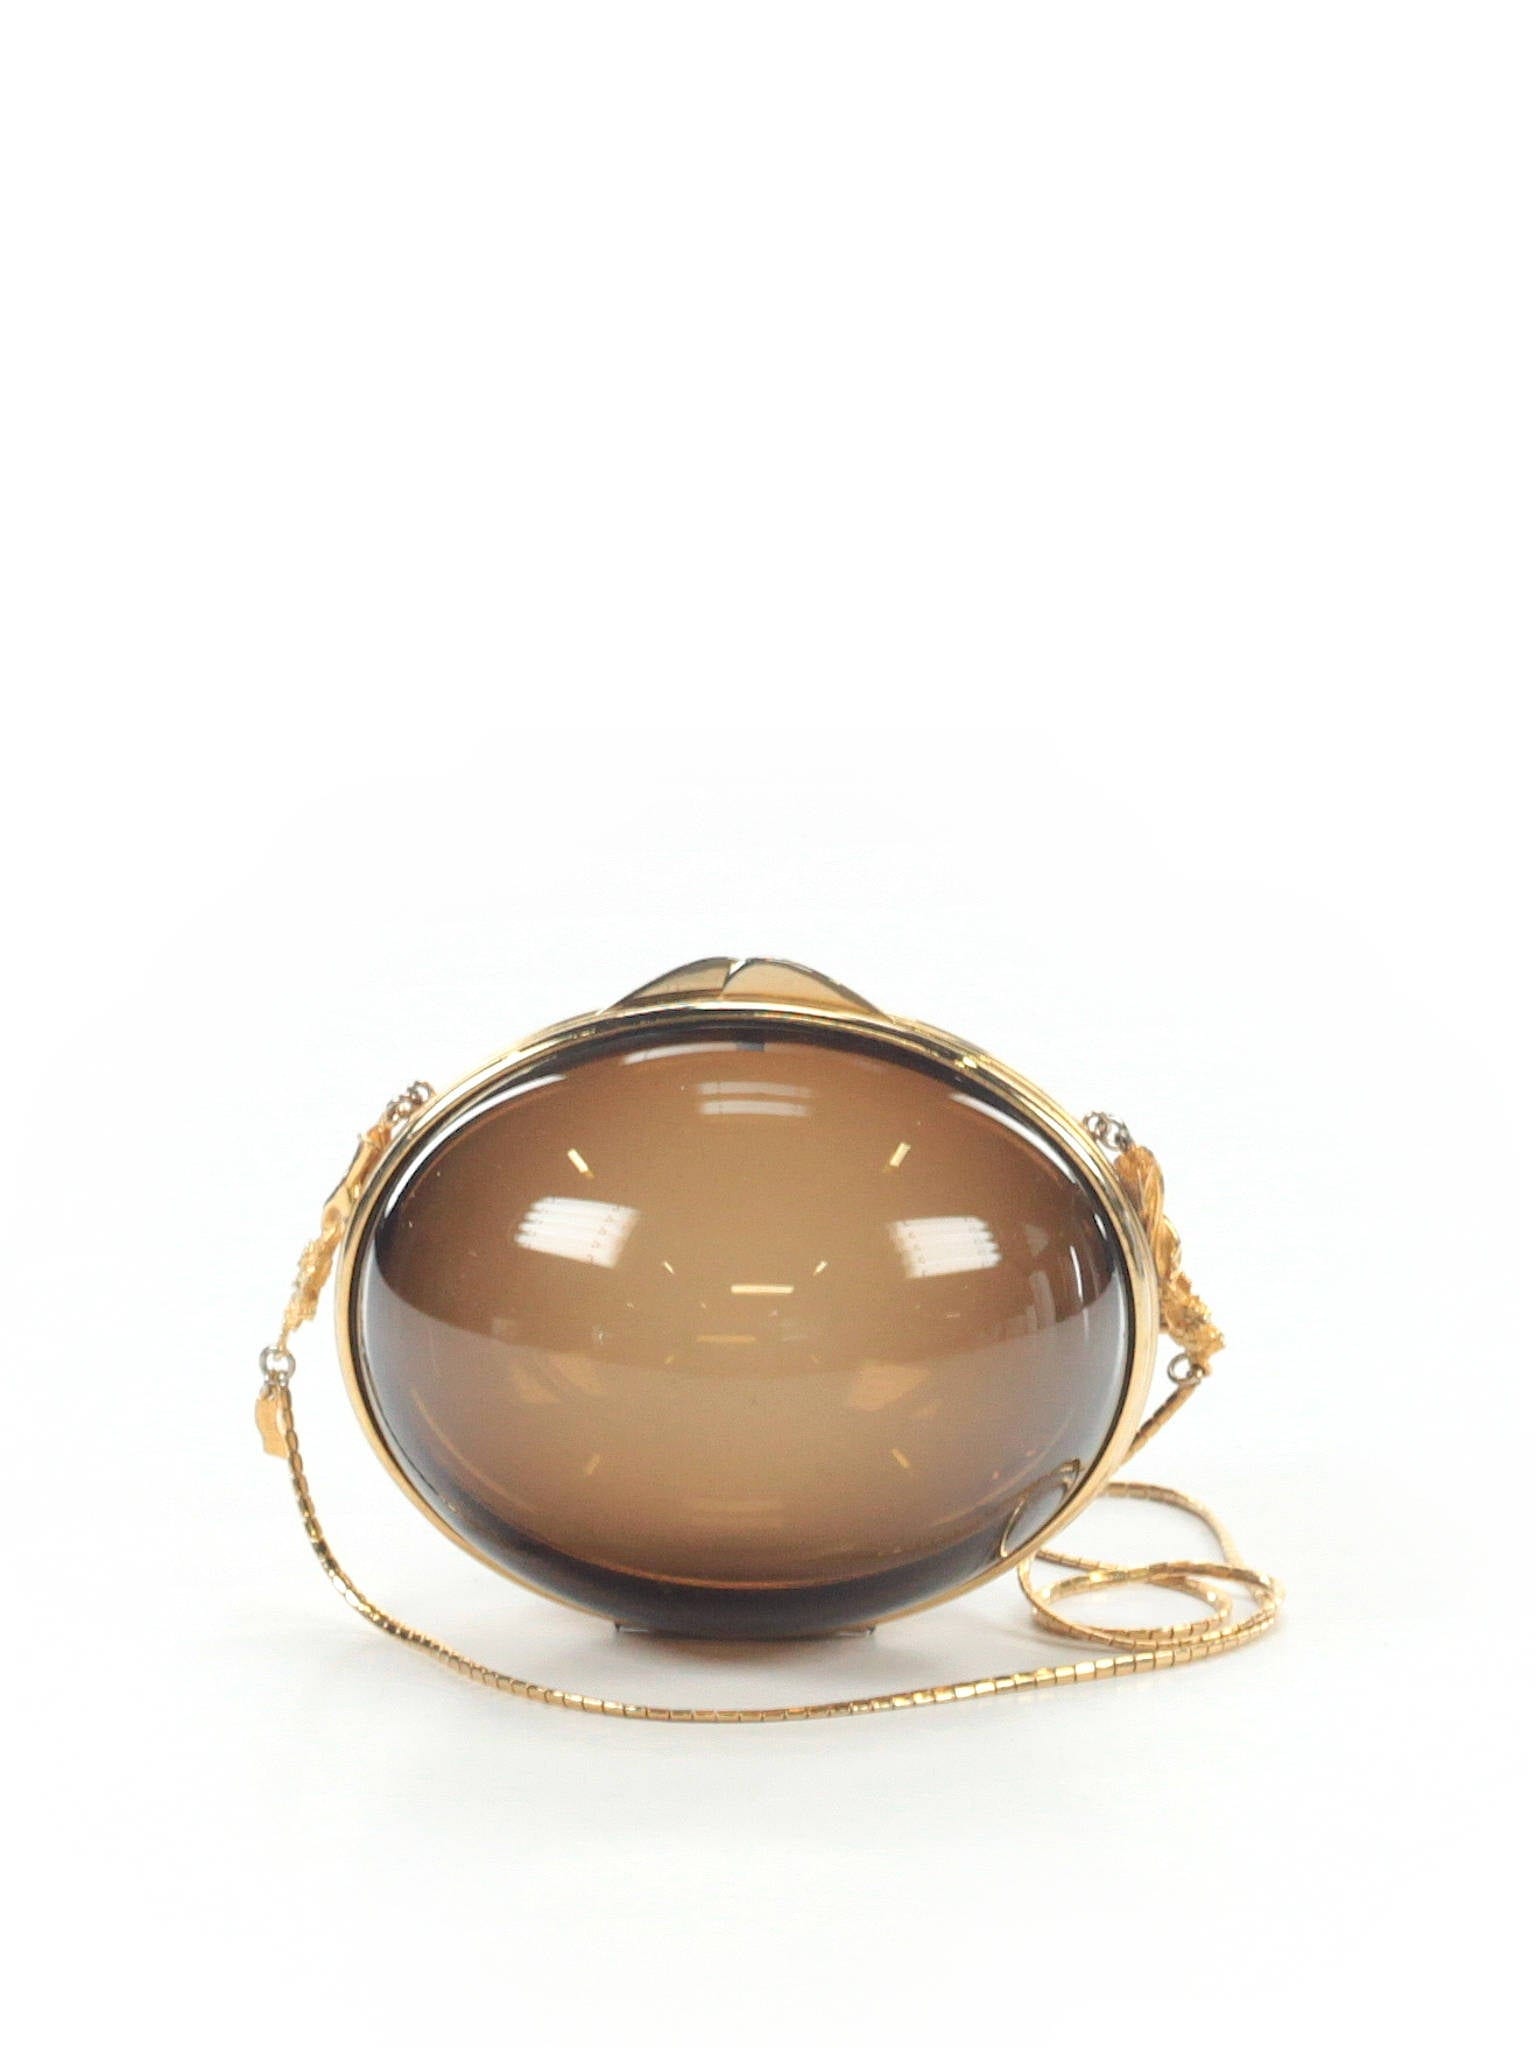 Judith Leiber Faberge Original Bow Museum Egg Minaudiere Purse Shoulder Bag